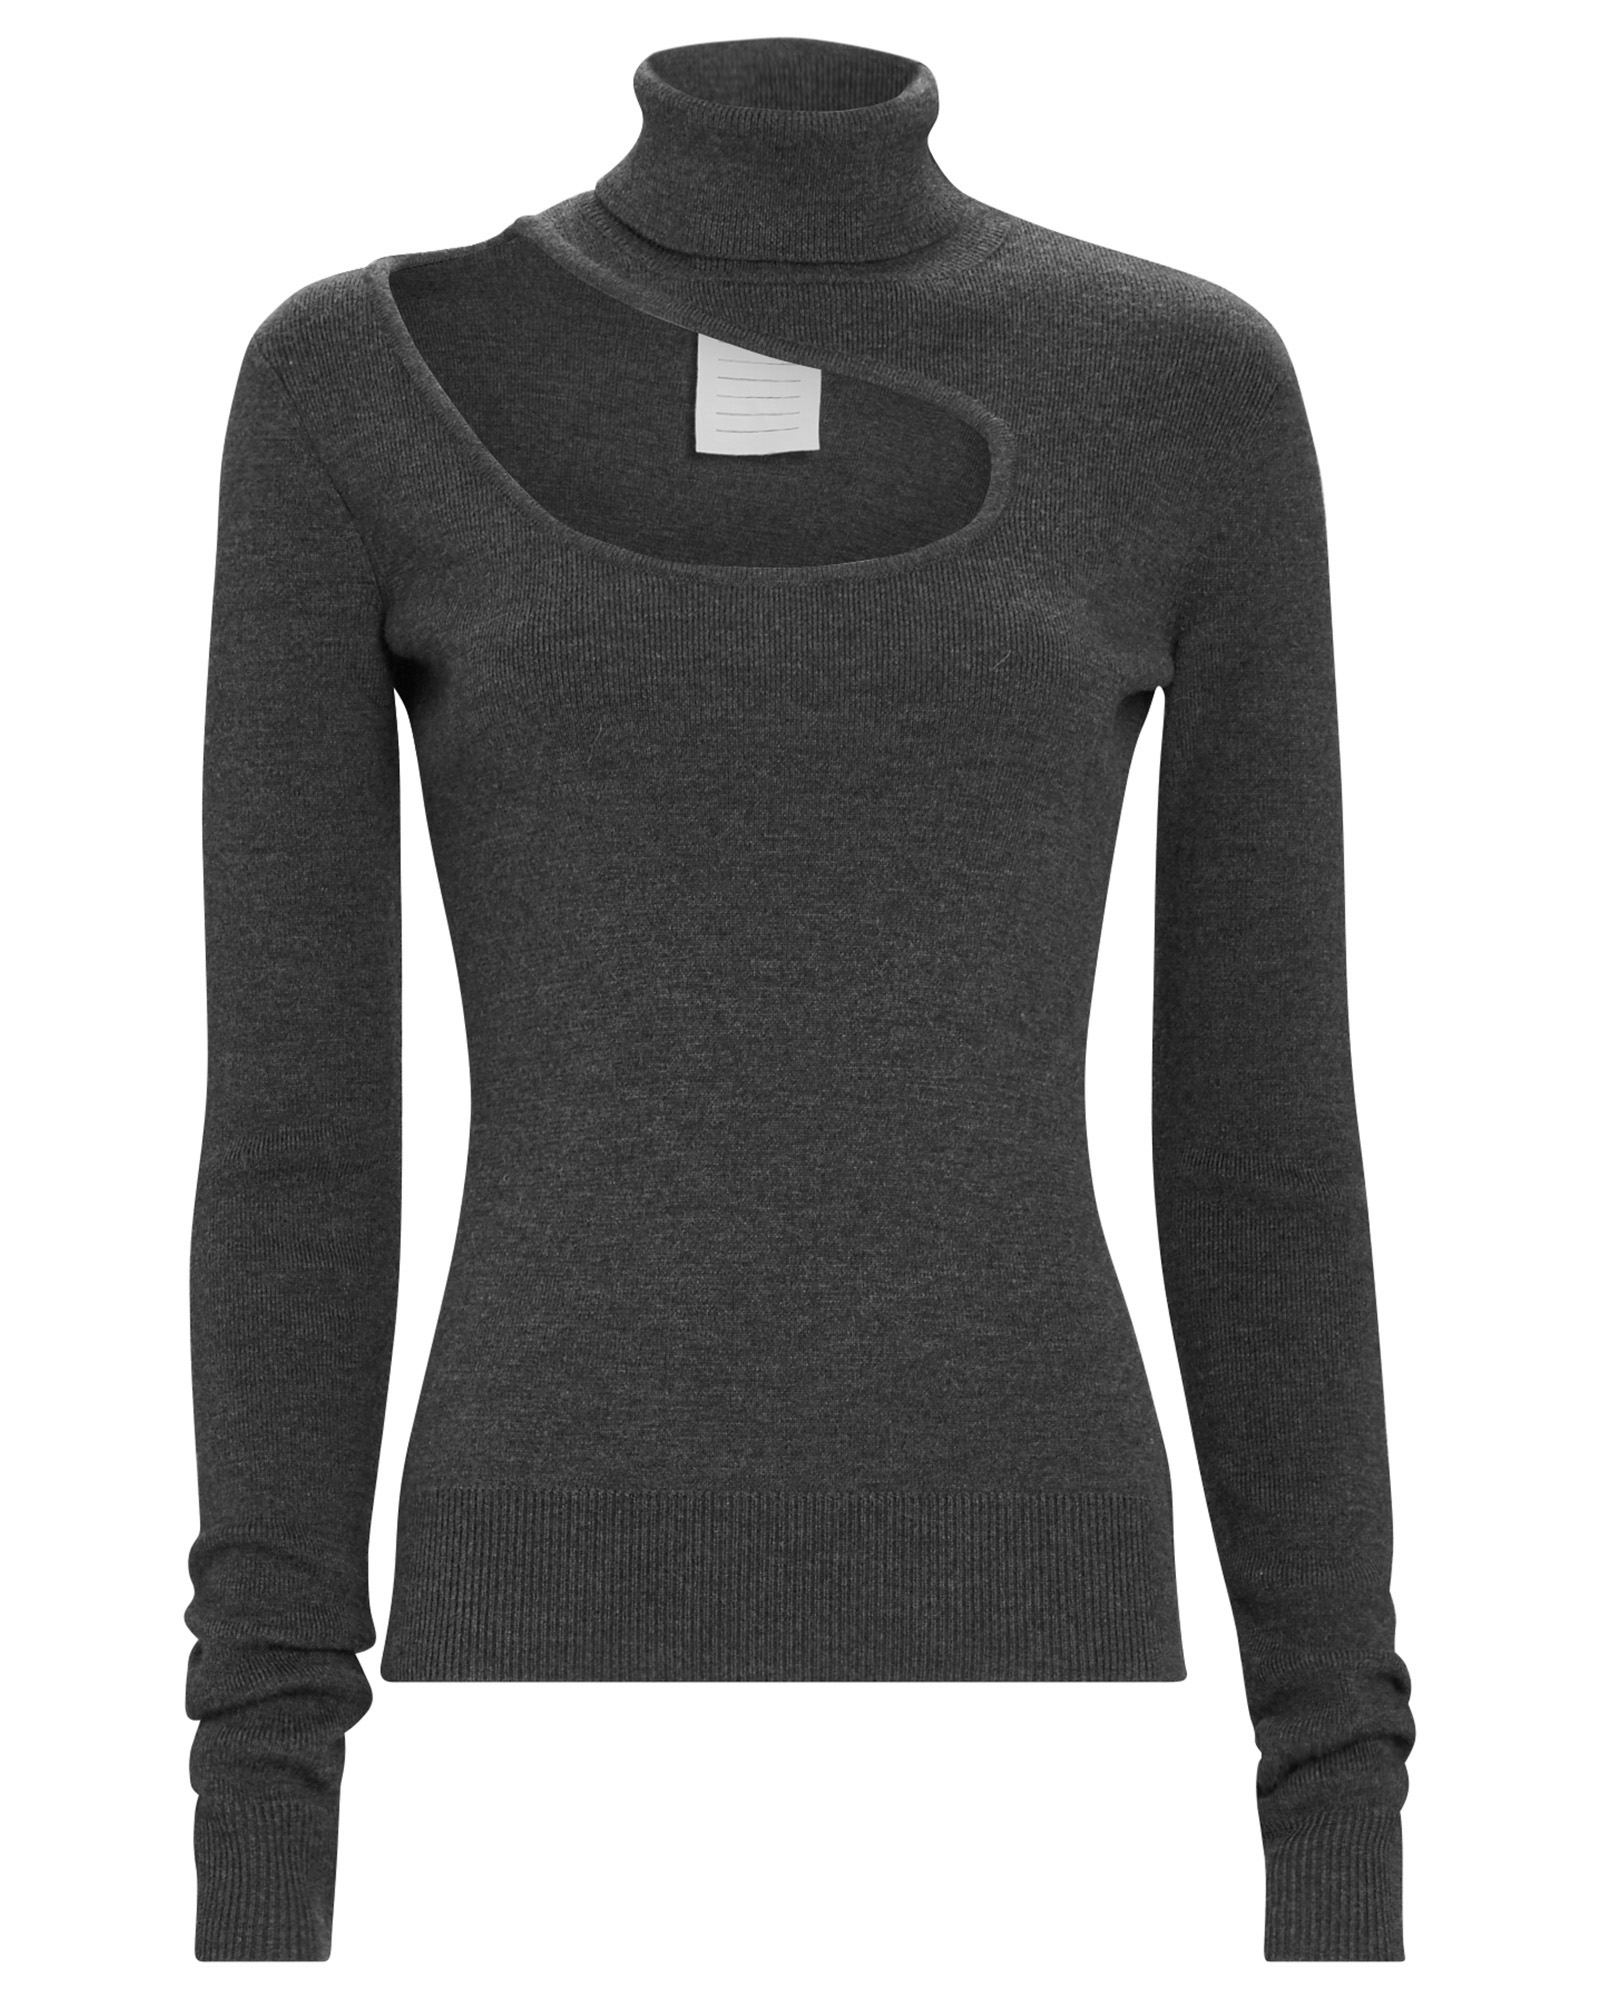 Monse Cut-Out Turtleneck Sweater | INTERMIX®